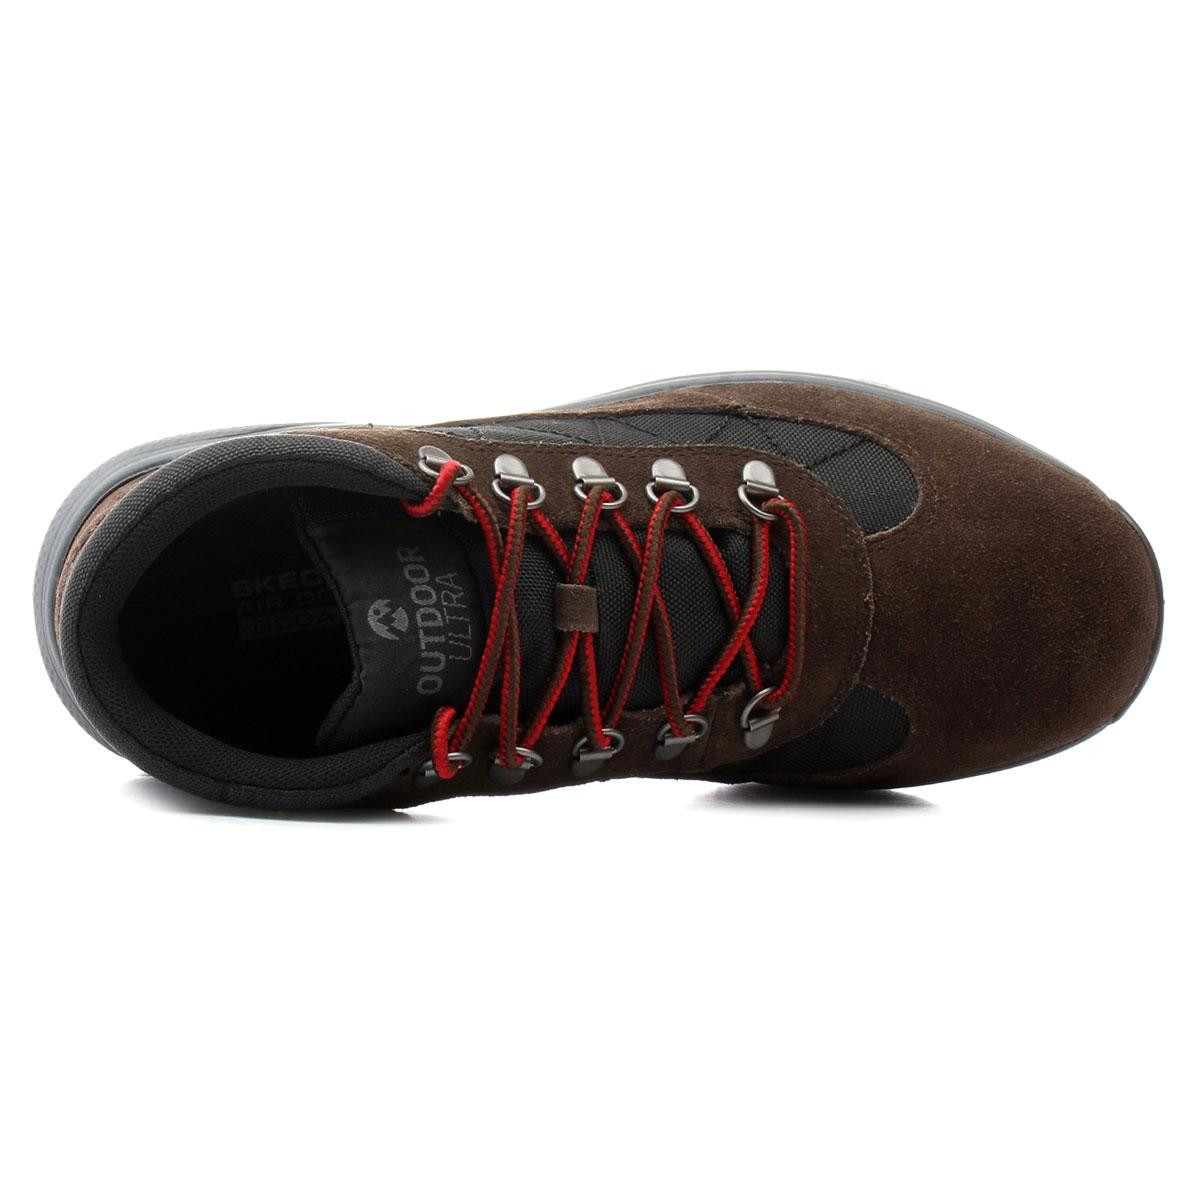 Cipele OUTDOOR ULTRA - ADVENTURES | Extra Sports - Online Shop